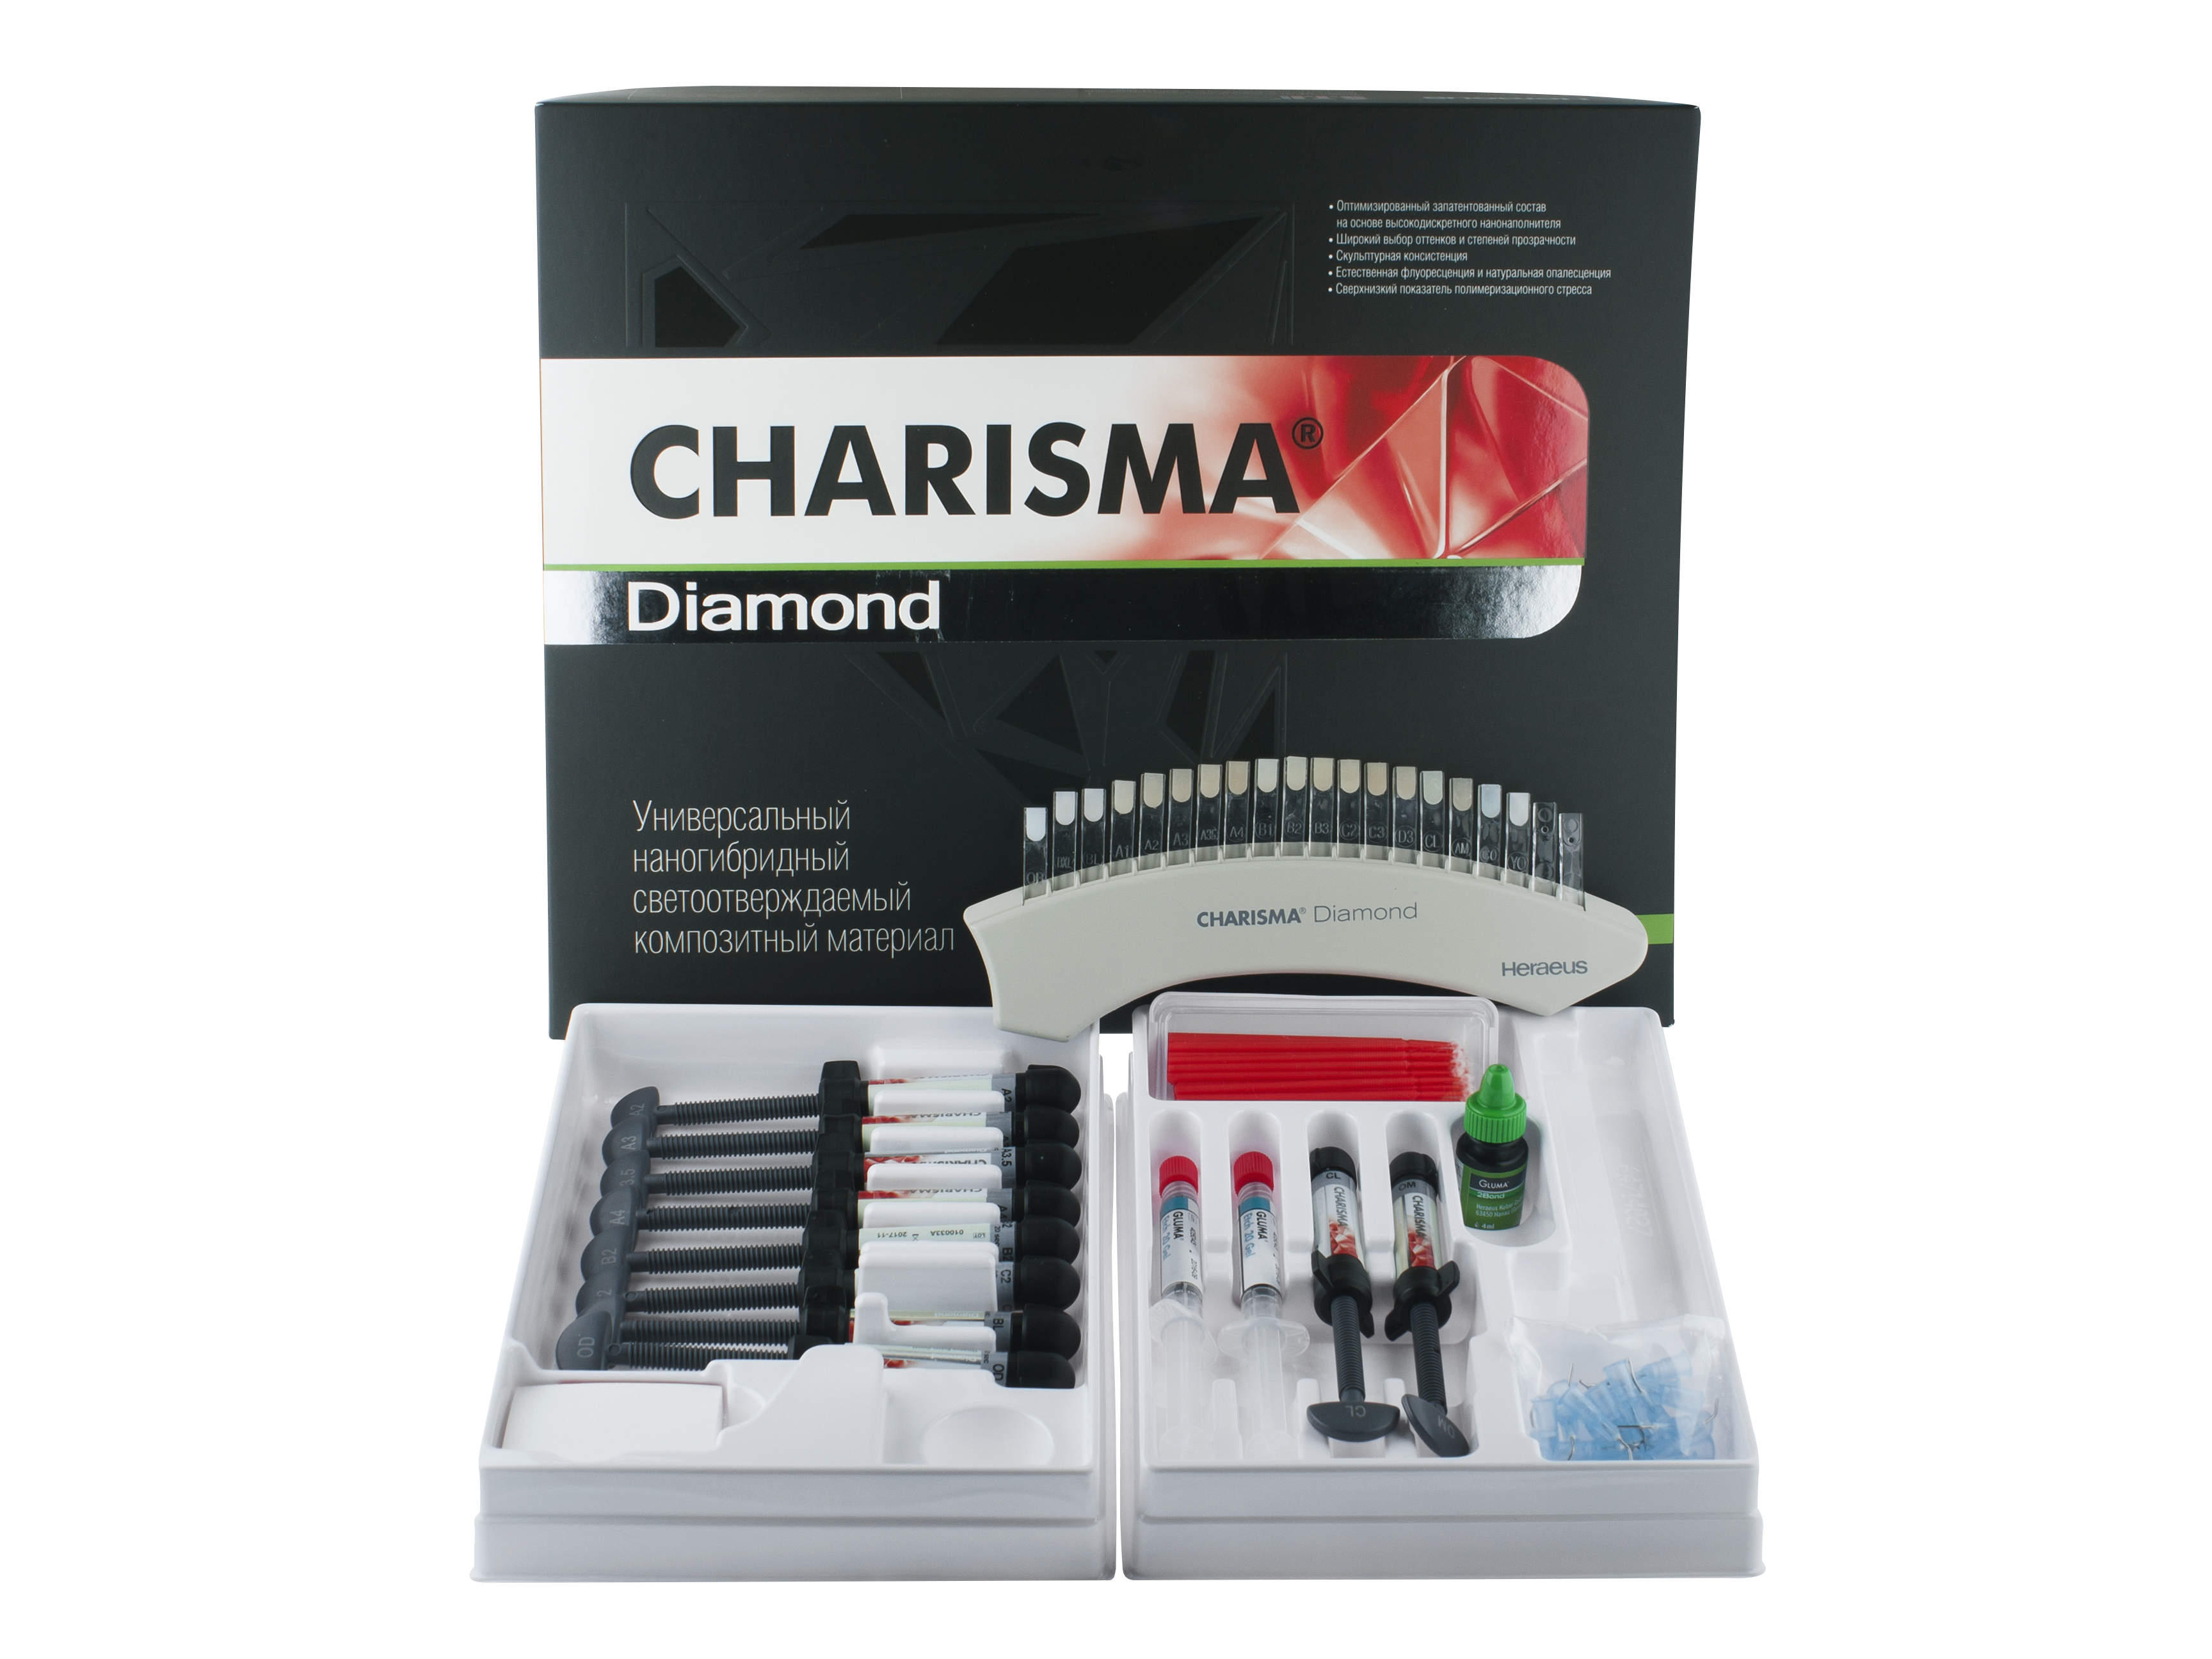 CHARISMA DIAMOND Master Kit